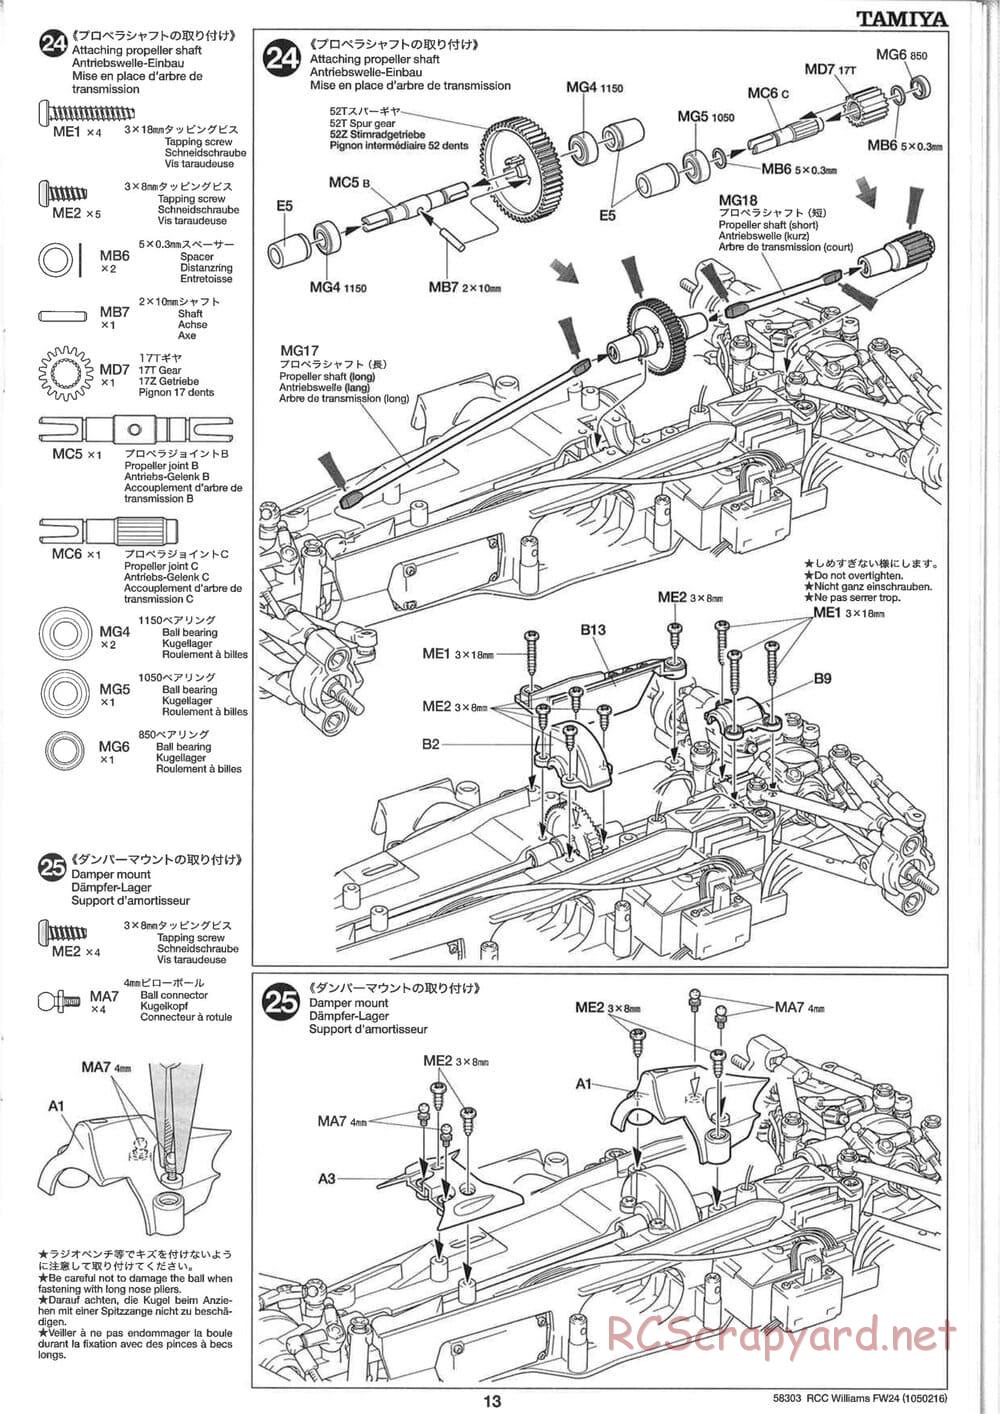 Tamiya - Williams F1 BMW FW24 - F201 Chassis - Manual - Page 13